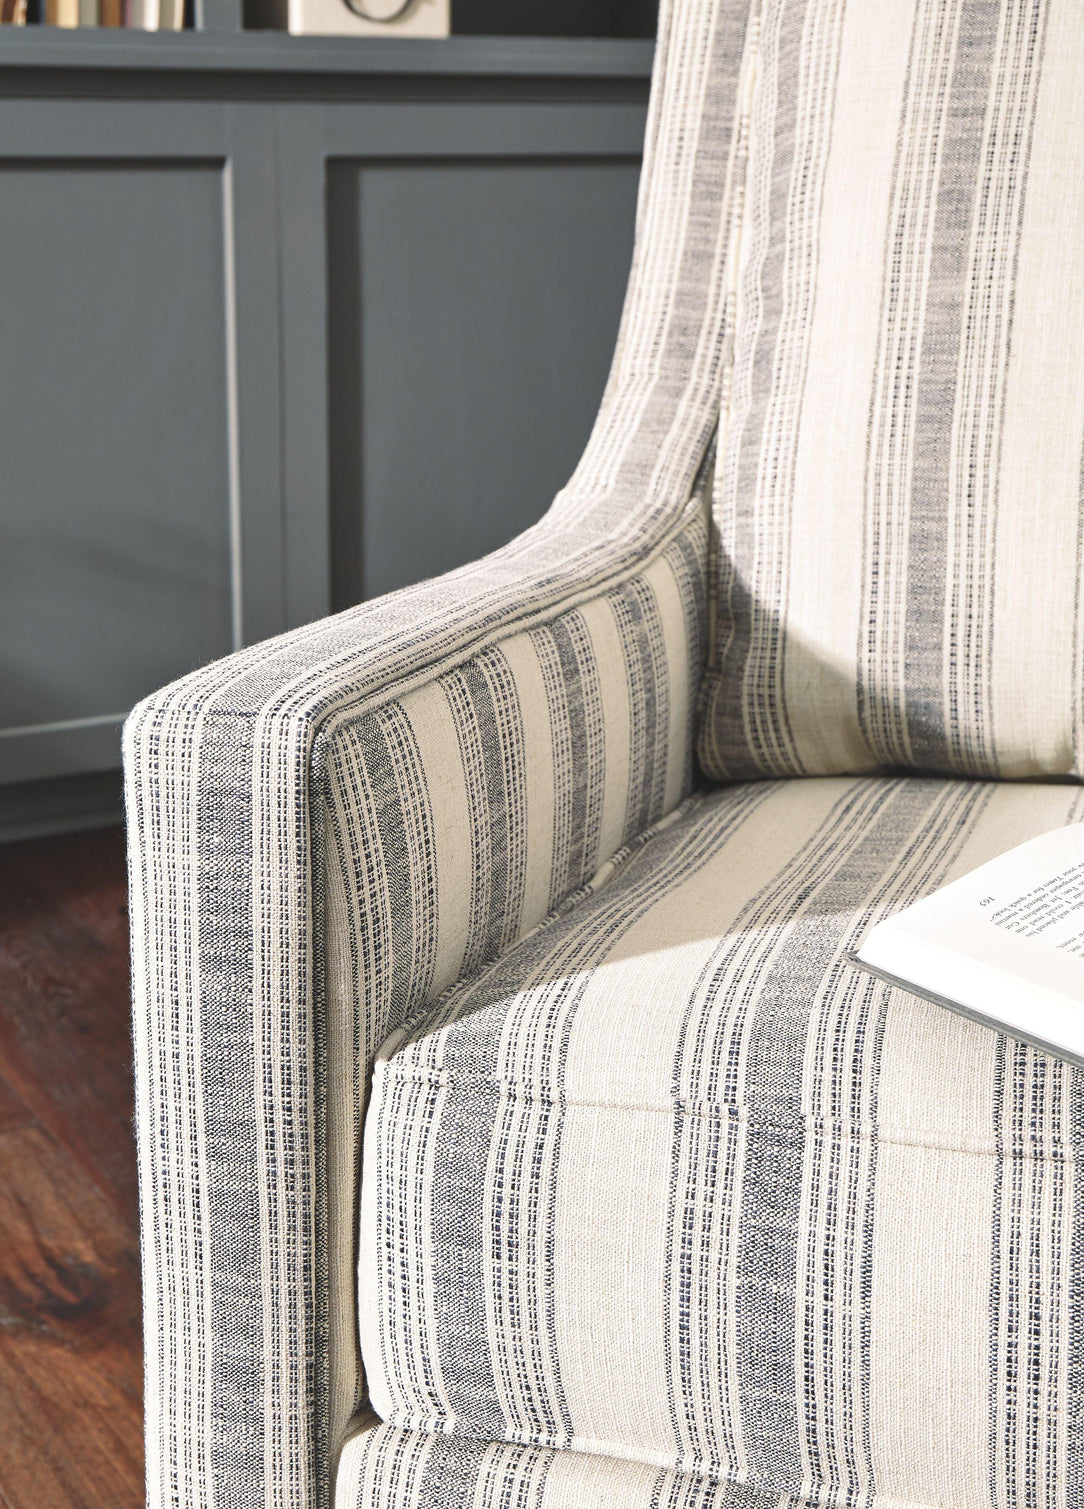 Signature Design by Ashley® - Kambria - Swivel Glider Accent Chair - 5th Avenue Furniture